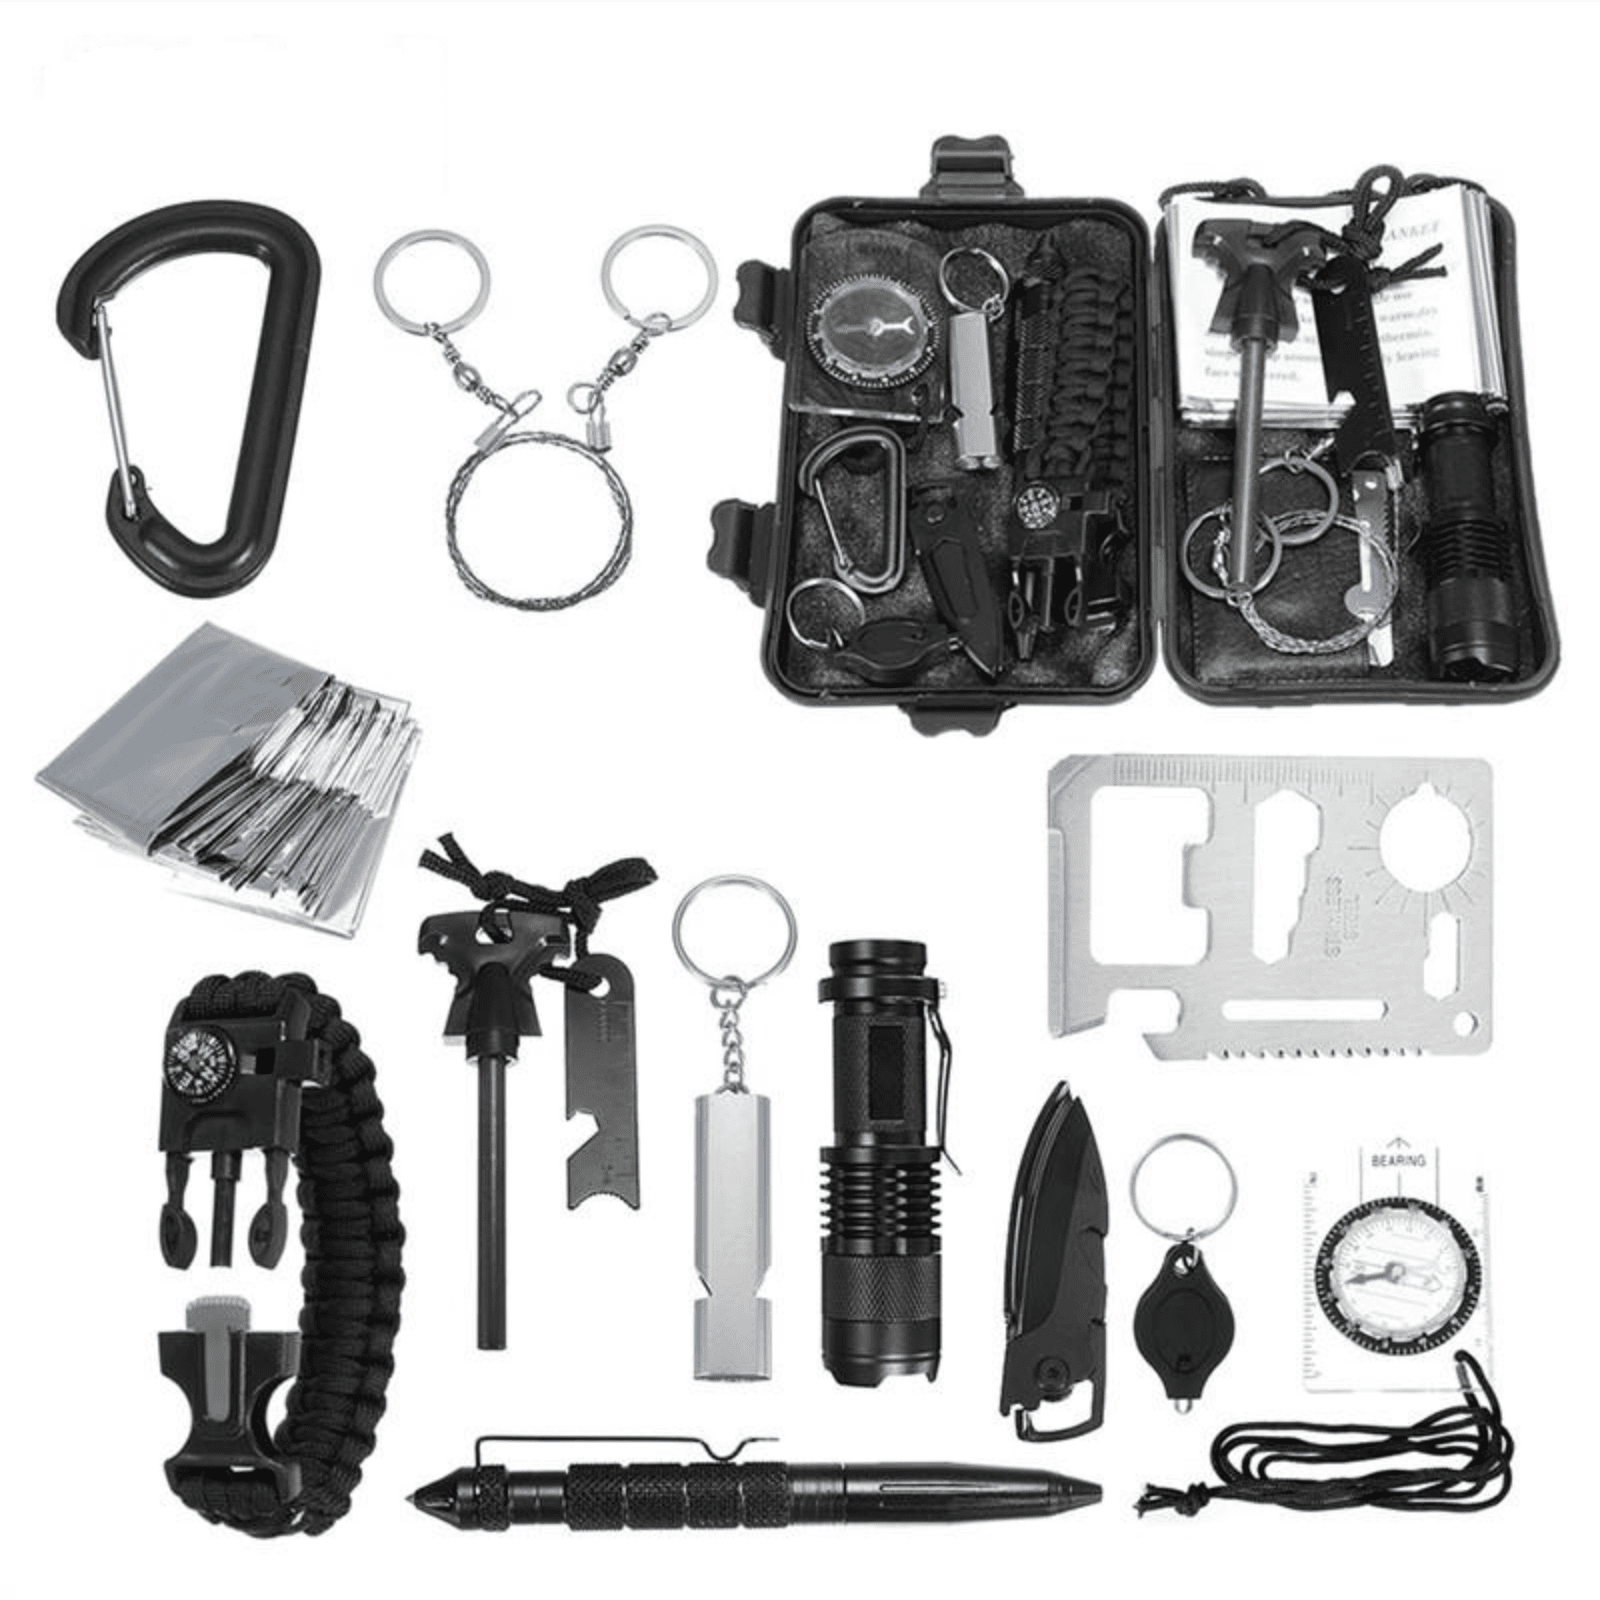 13 in 1 Outdoor Emergency Survival Kit Survival Gear